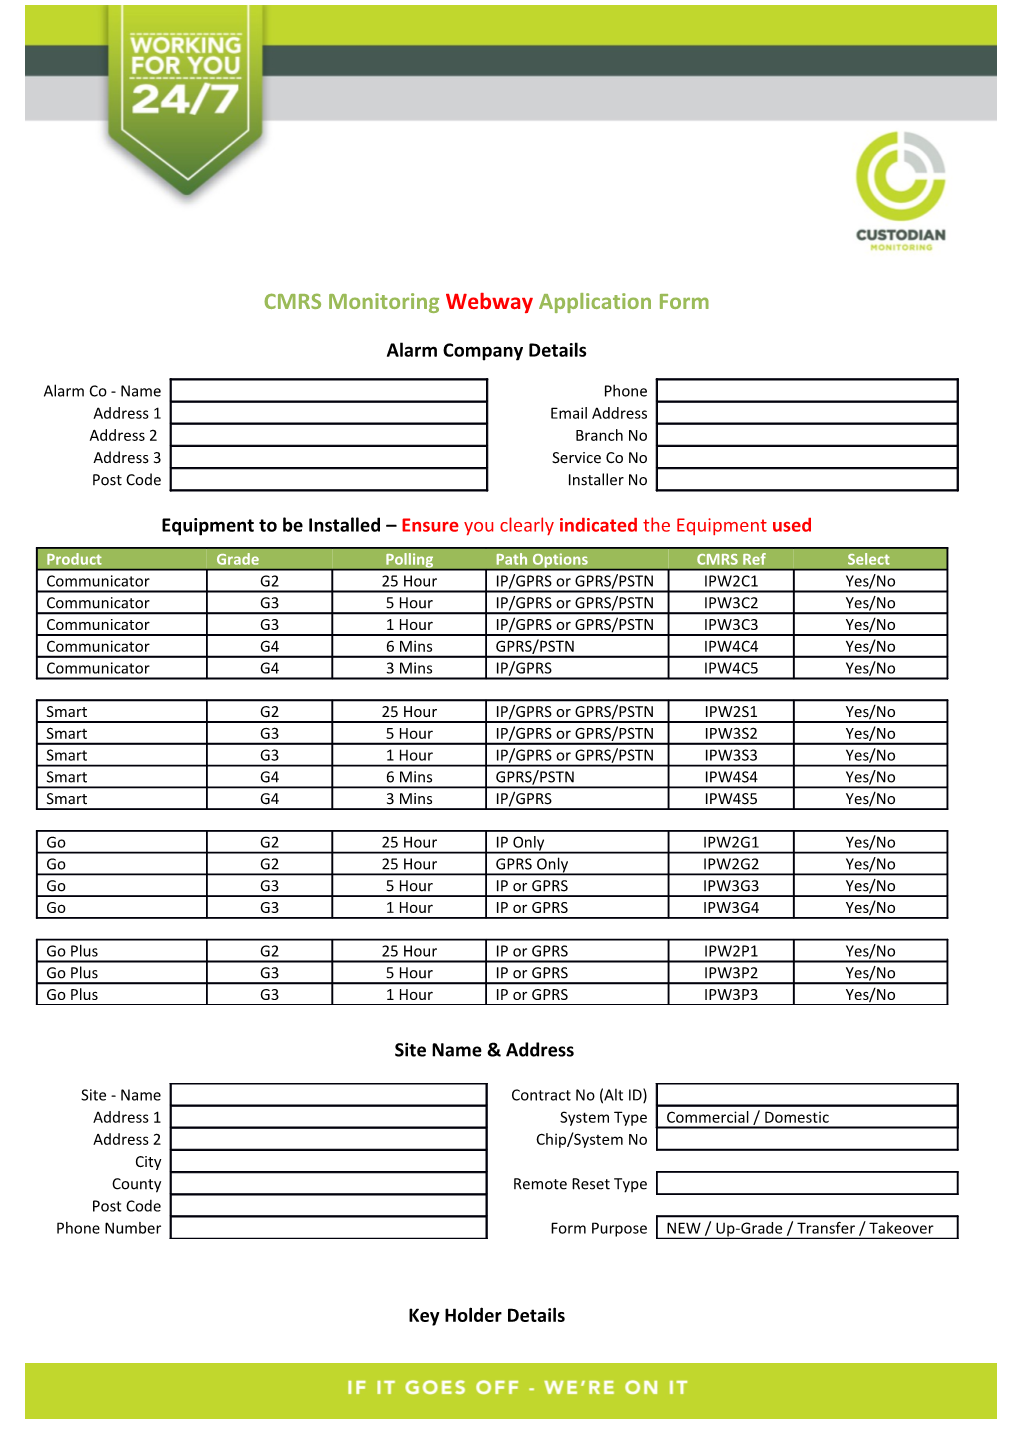 CMRS Monitoring Webwayapplication Form